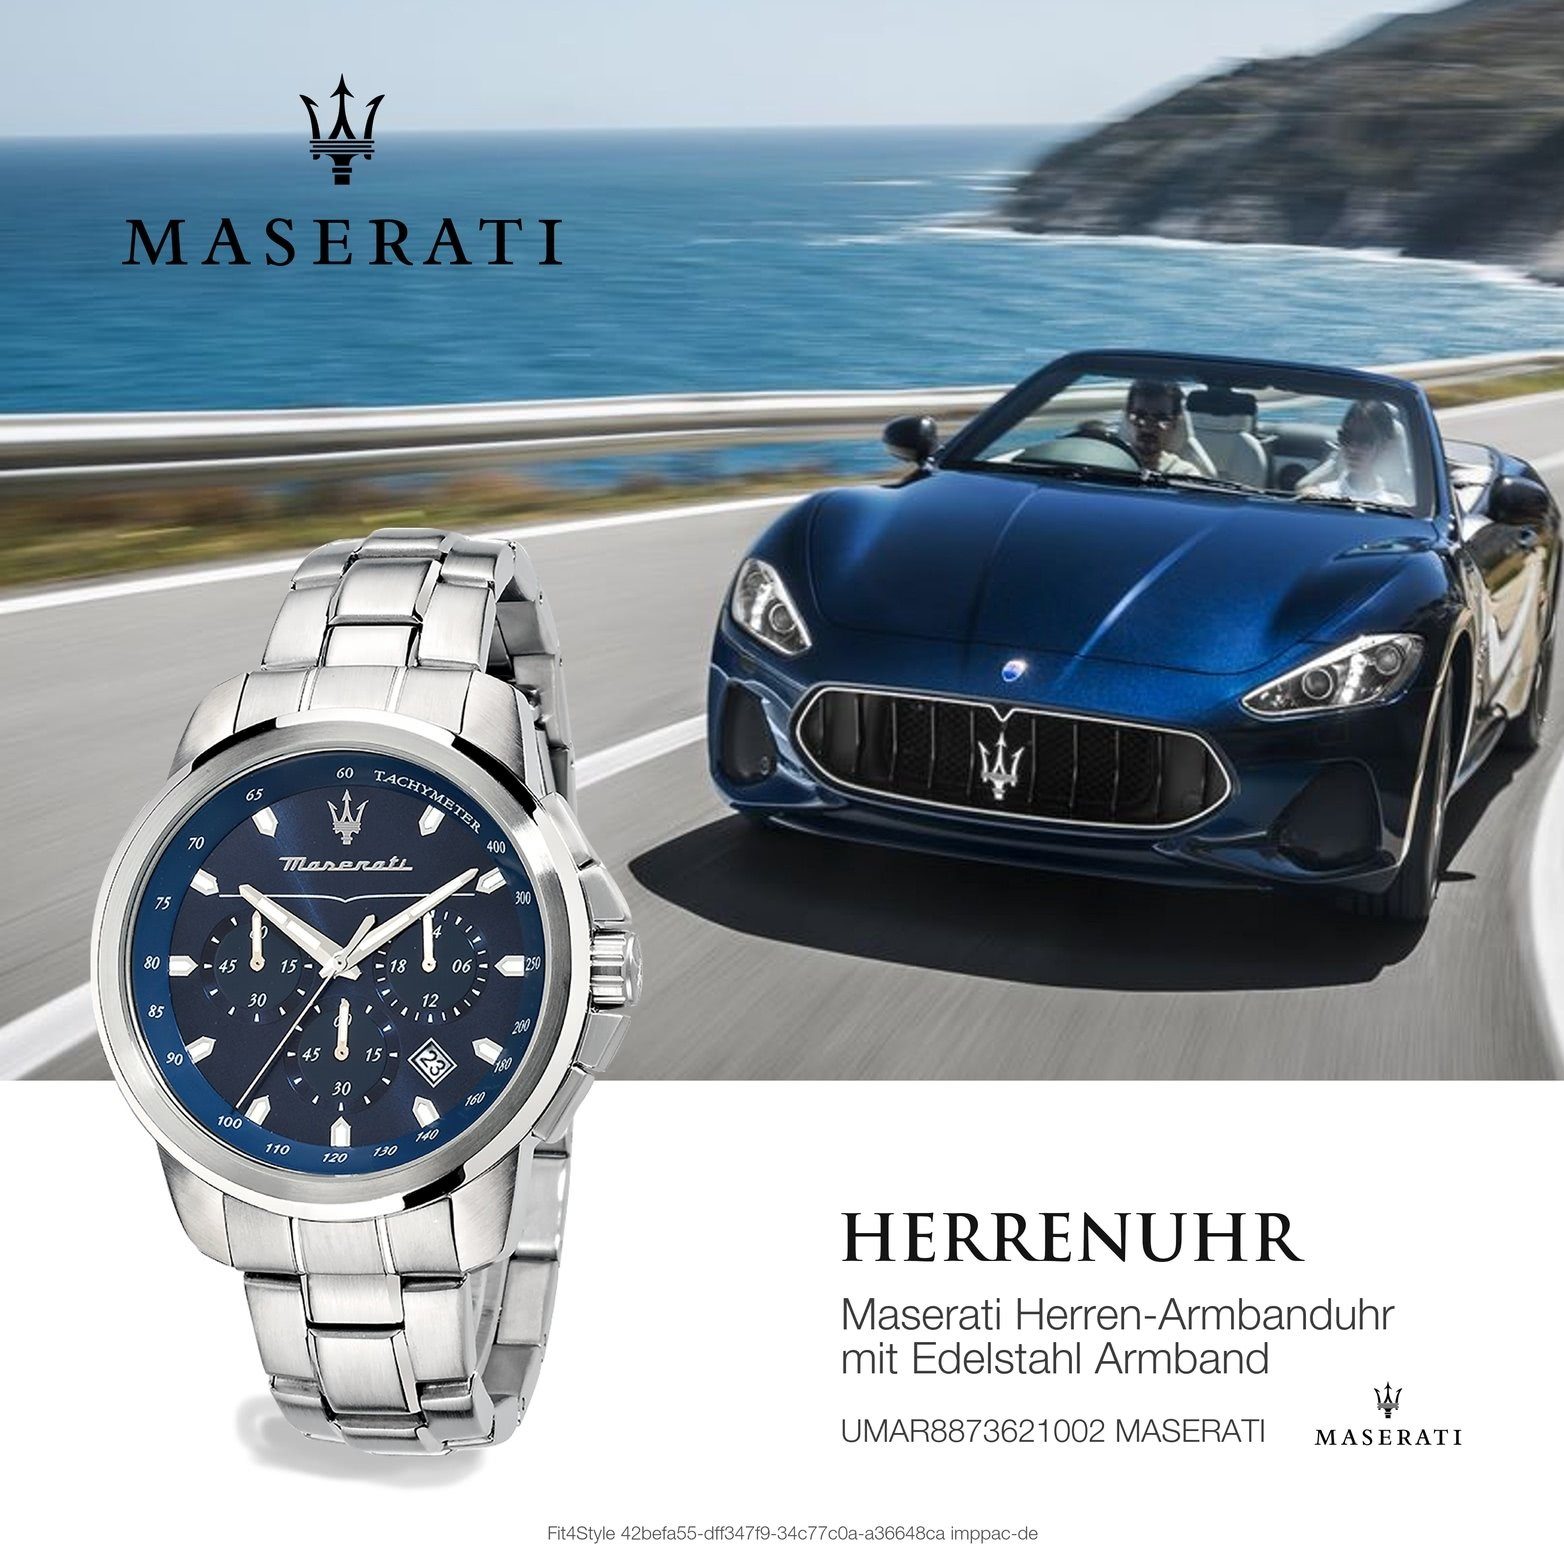 MASERATI Chronograph Maserati Edelstahlarmband, Armband-Uhr, blau Edelstahl Herrenuhr 52x44mm) rundes Gehäuse, groß (ca